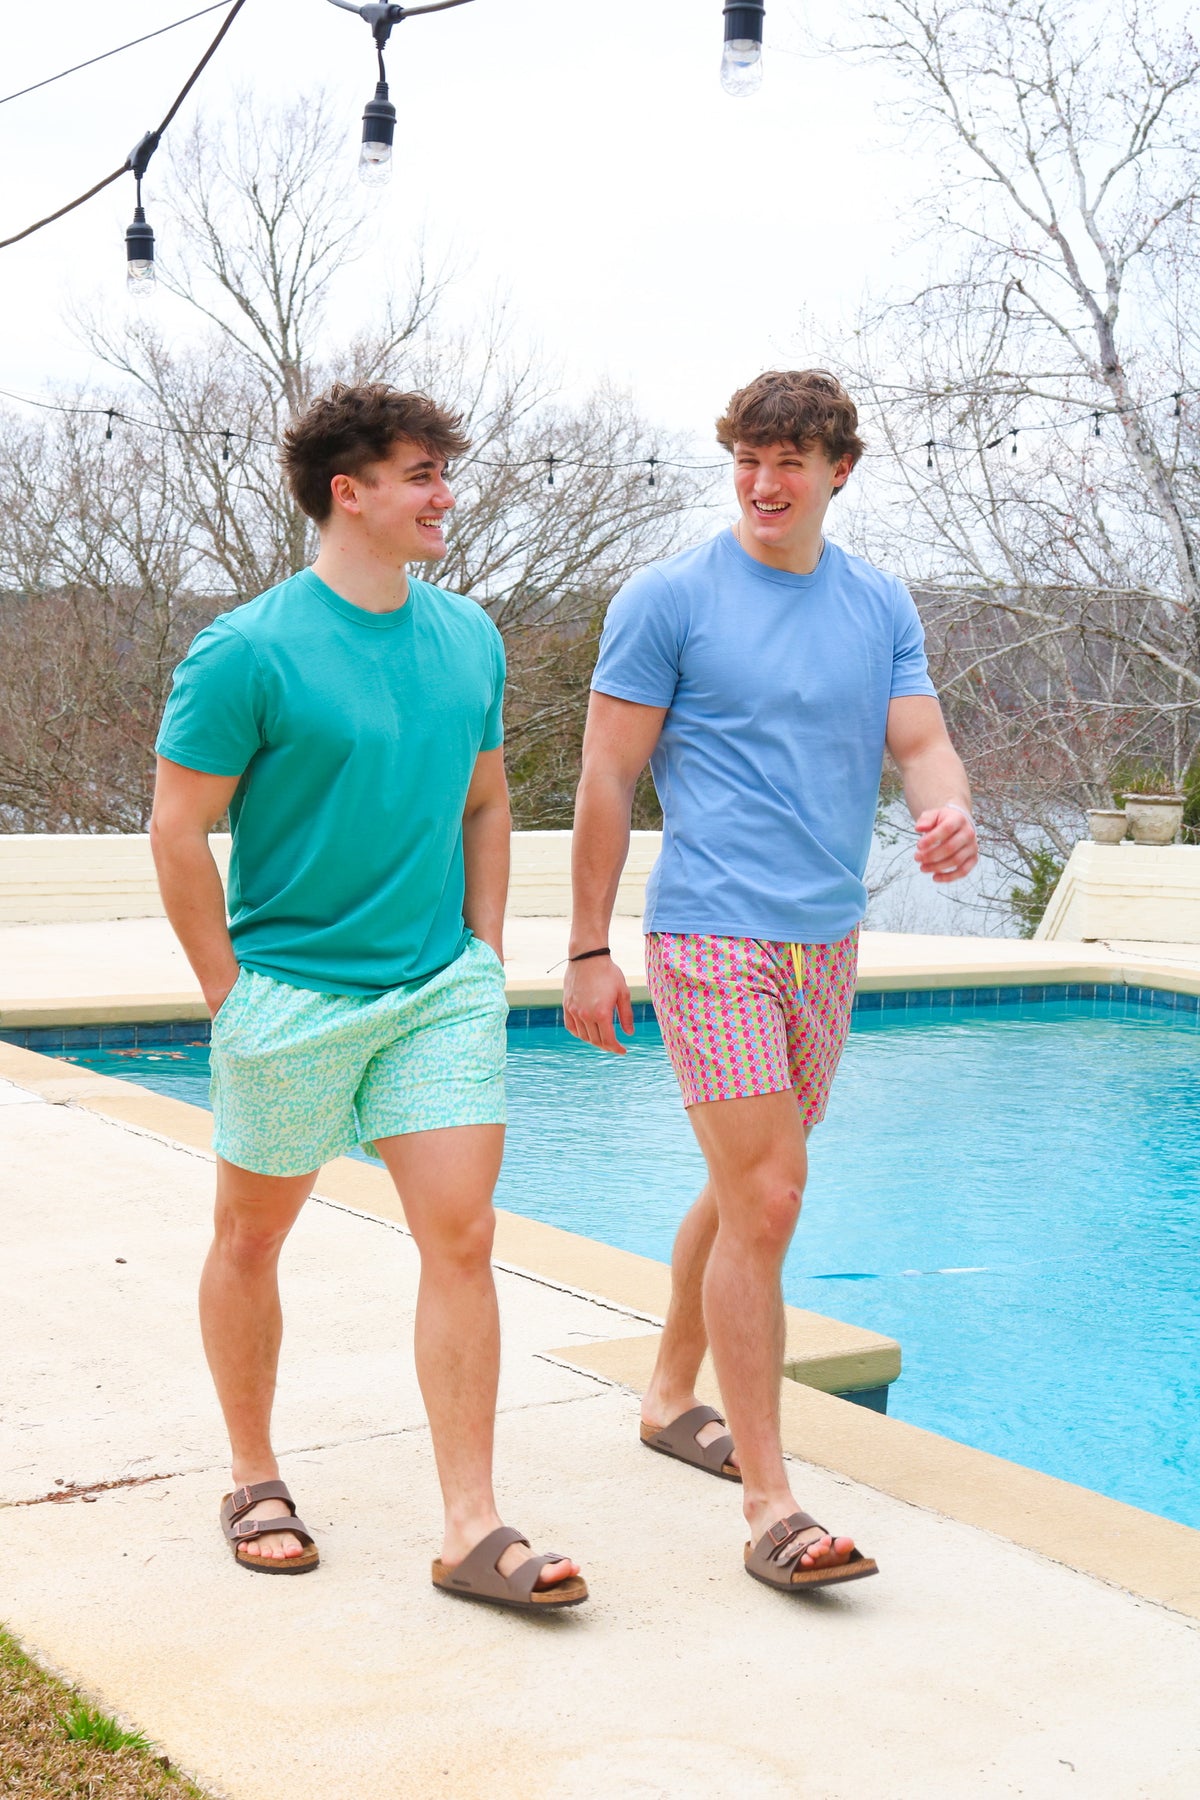 Southern Shirt Swim Shorts